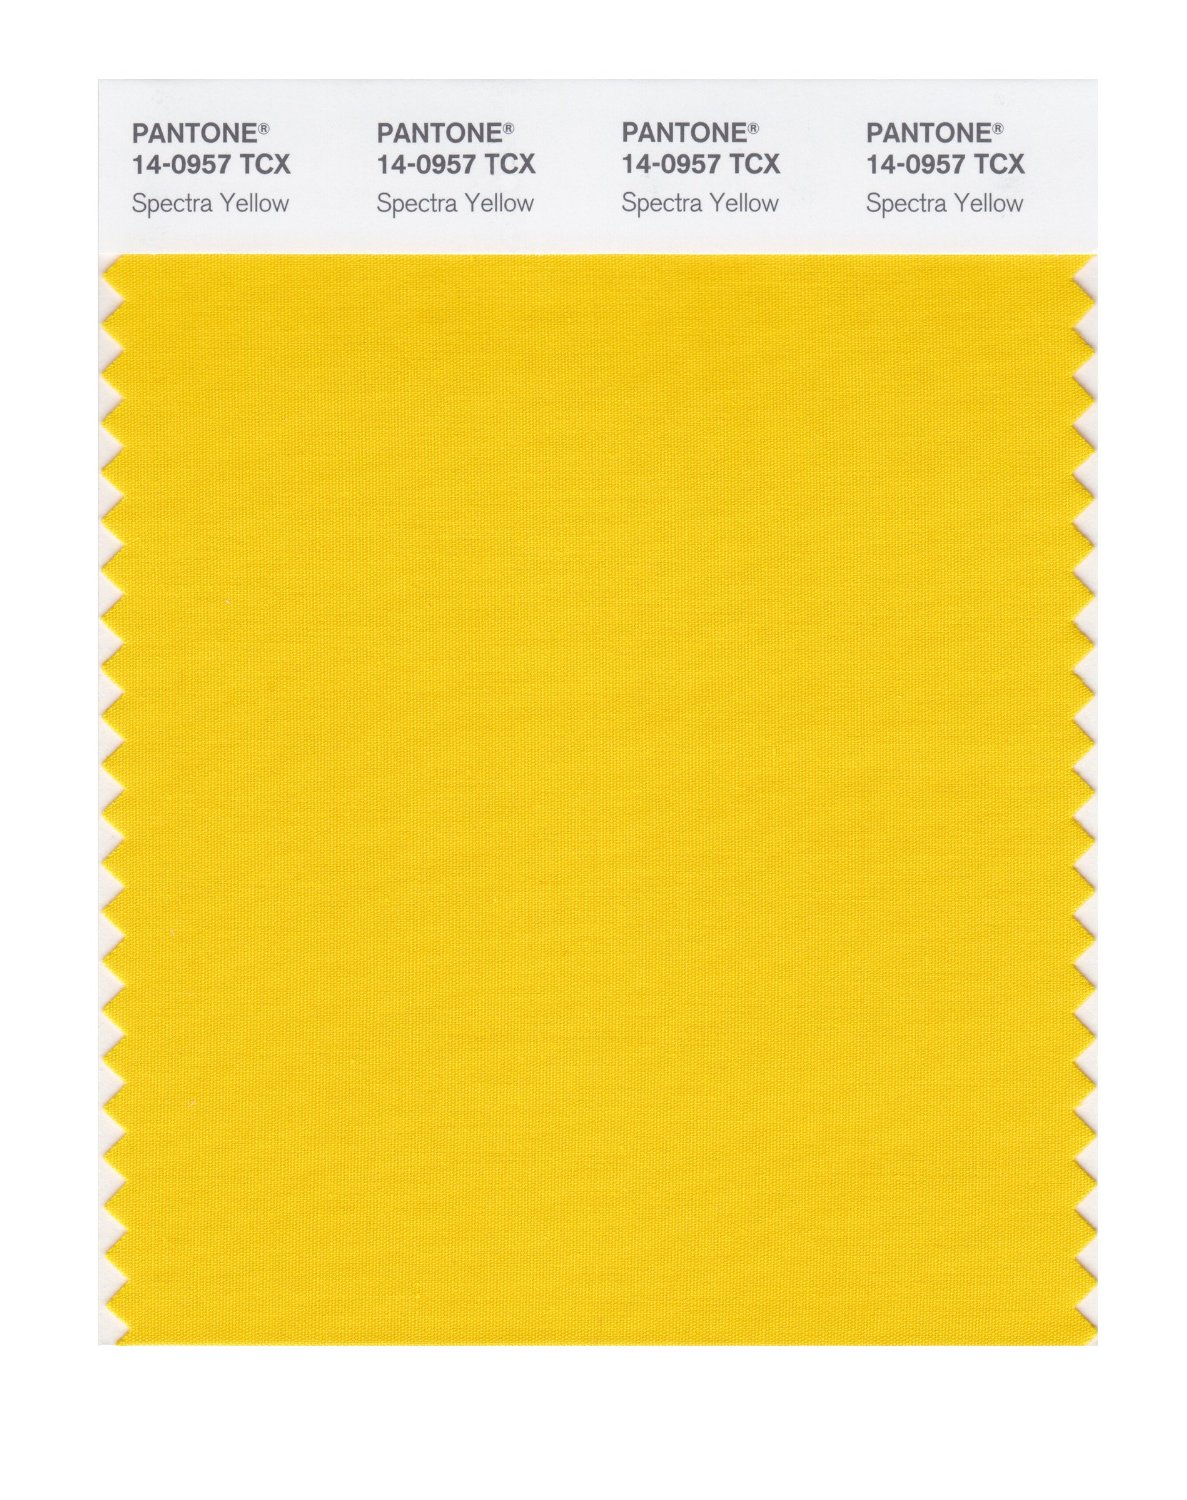 Pantone Cotton Swatch 14-0957 Spectra Yellow